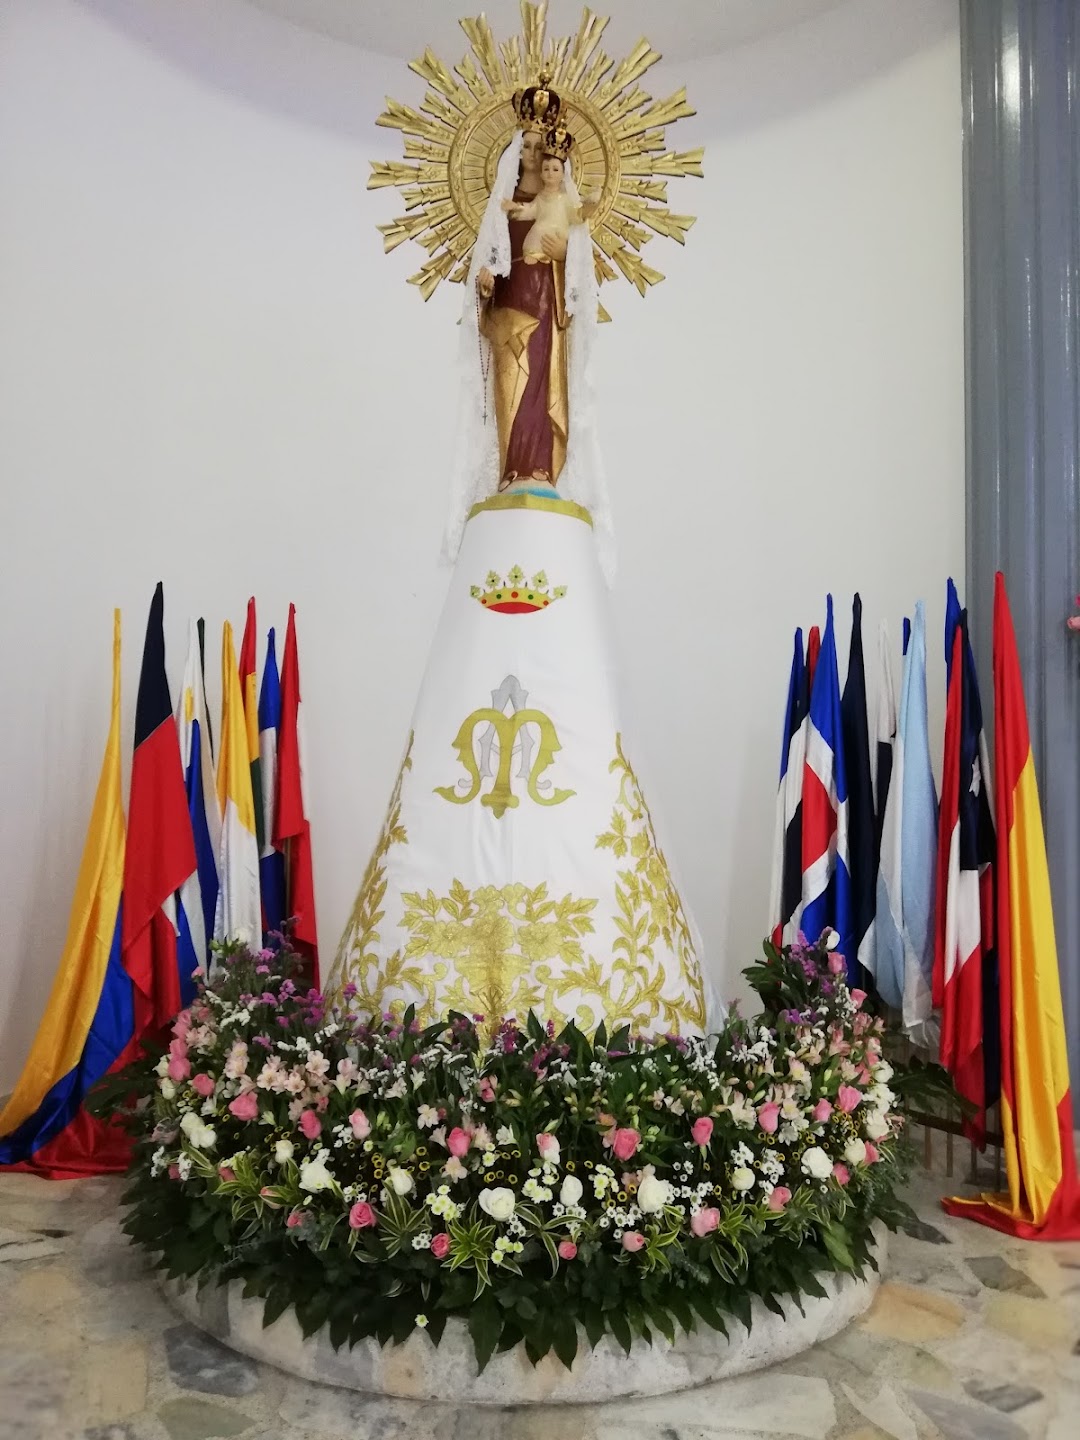 Parroquia Nuestra Señora Del Pilar